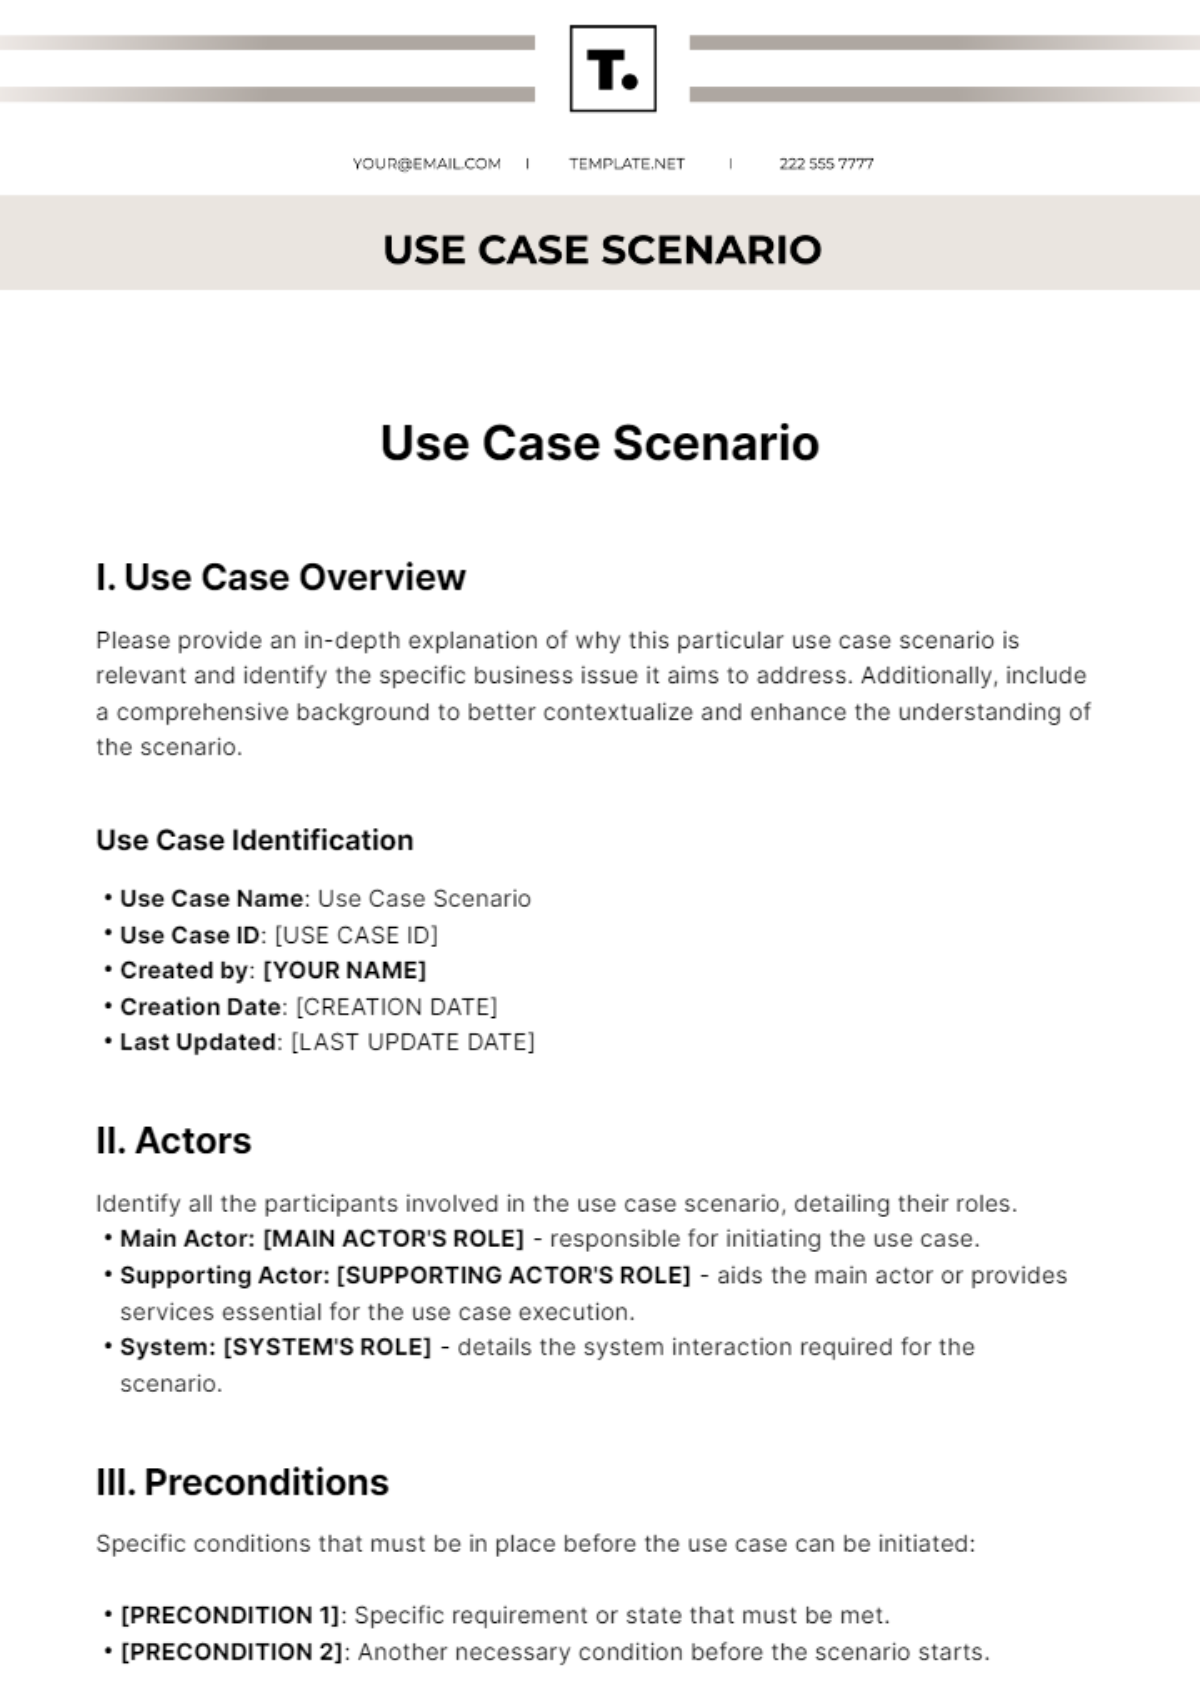 Use Case Scenario Template